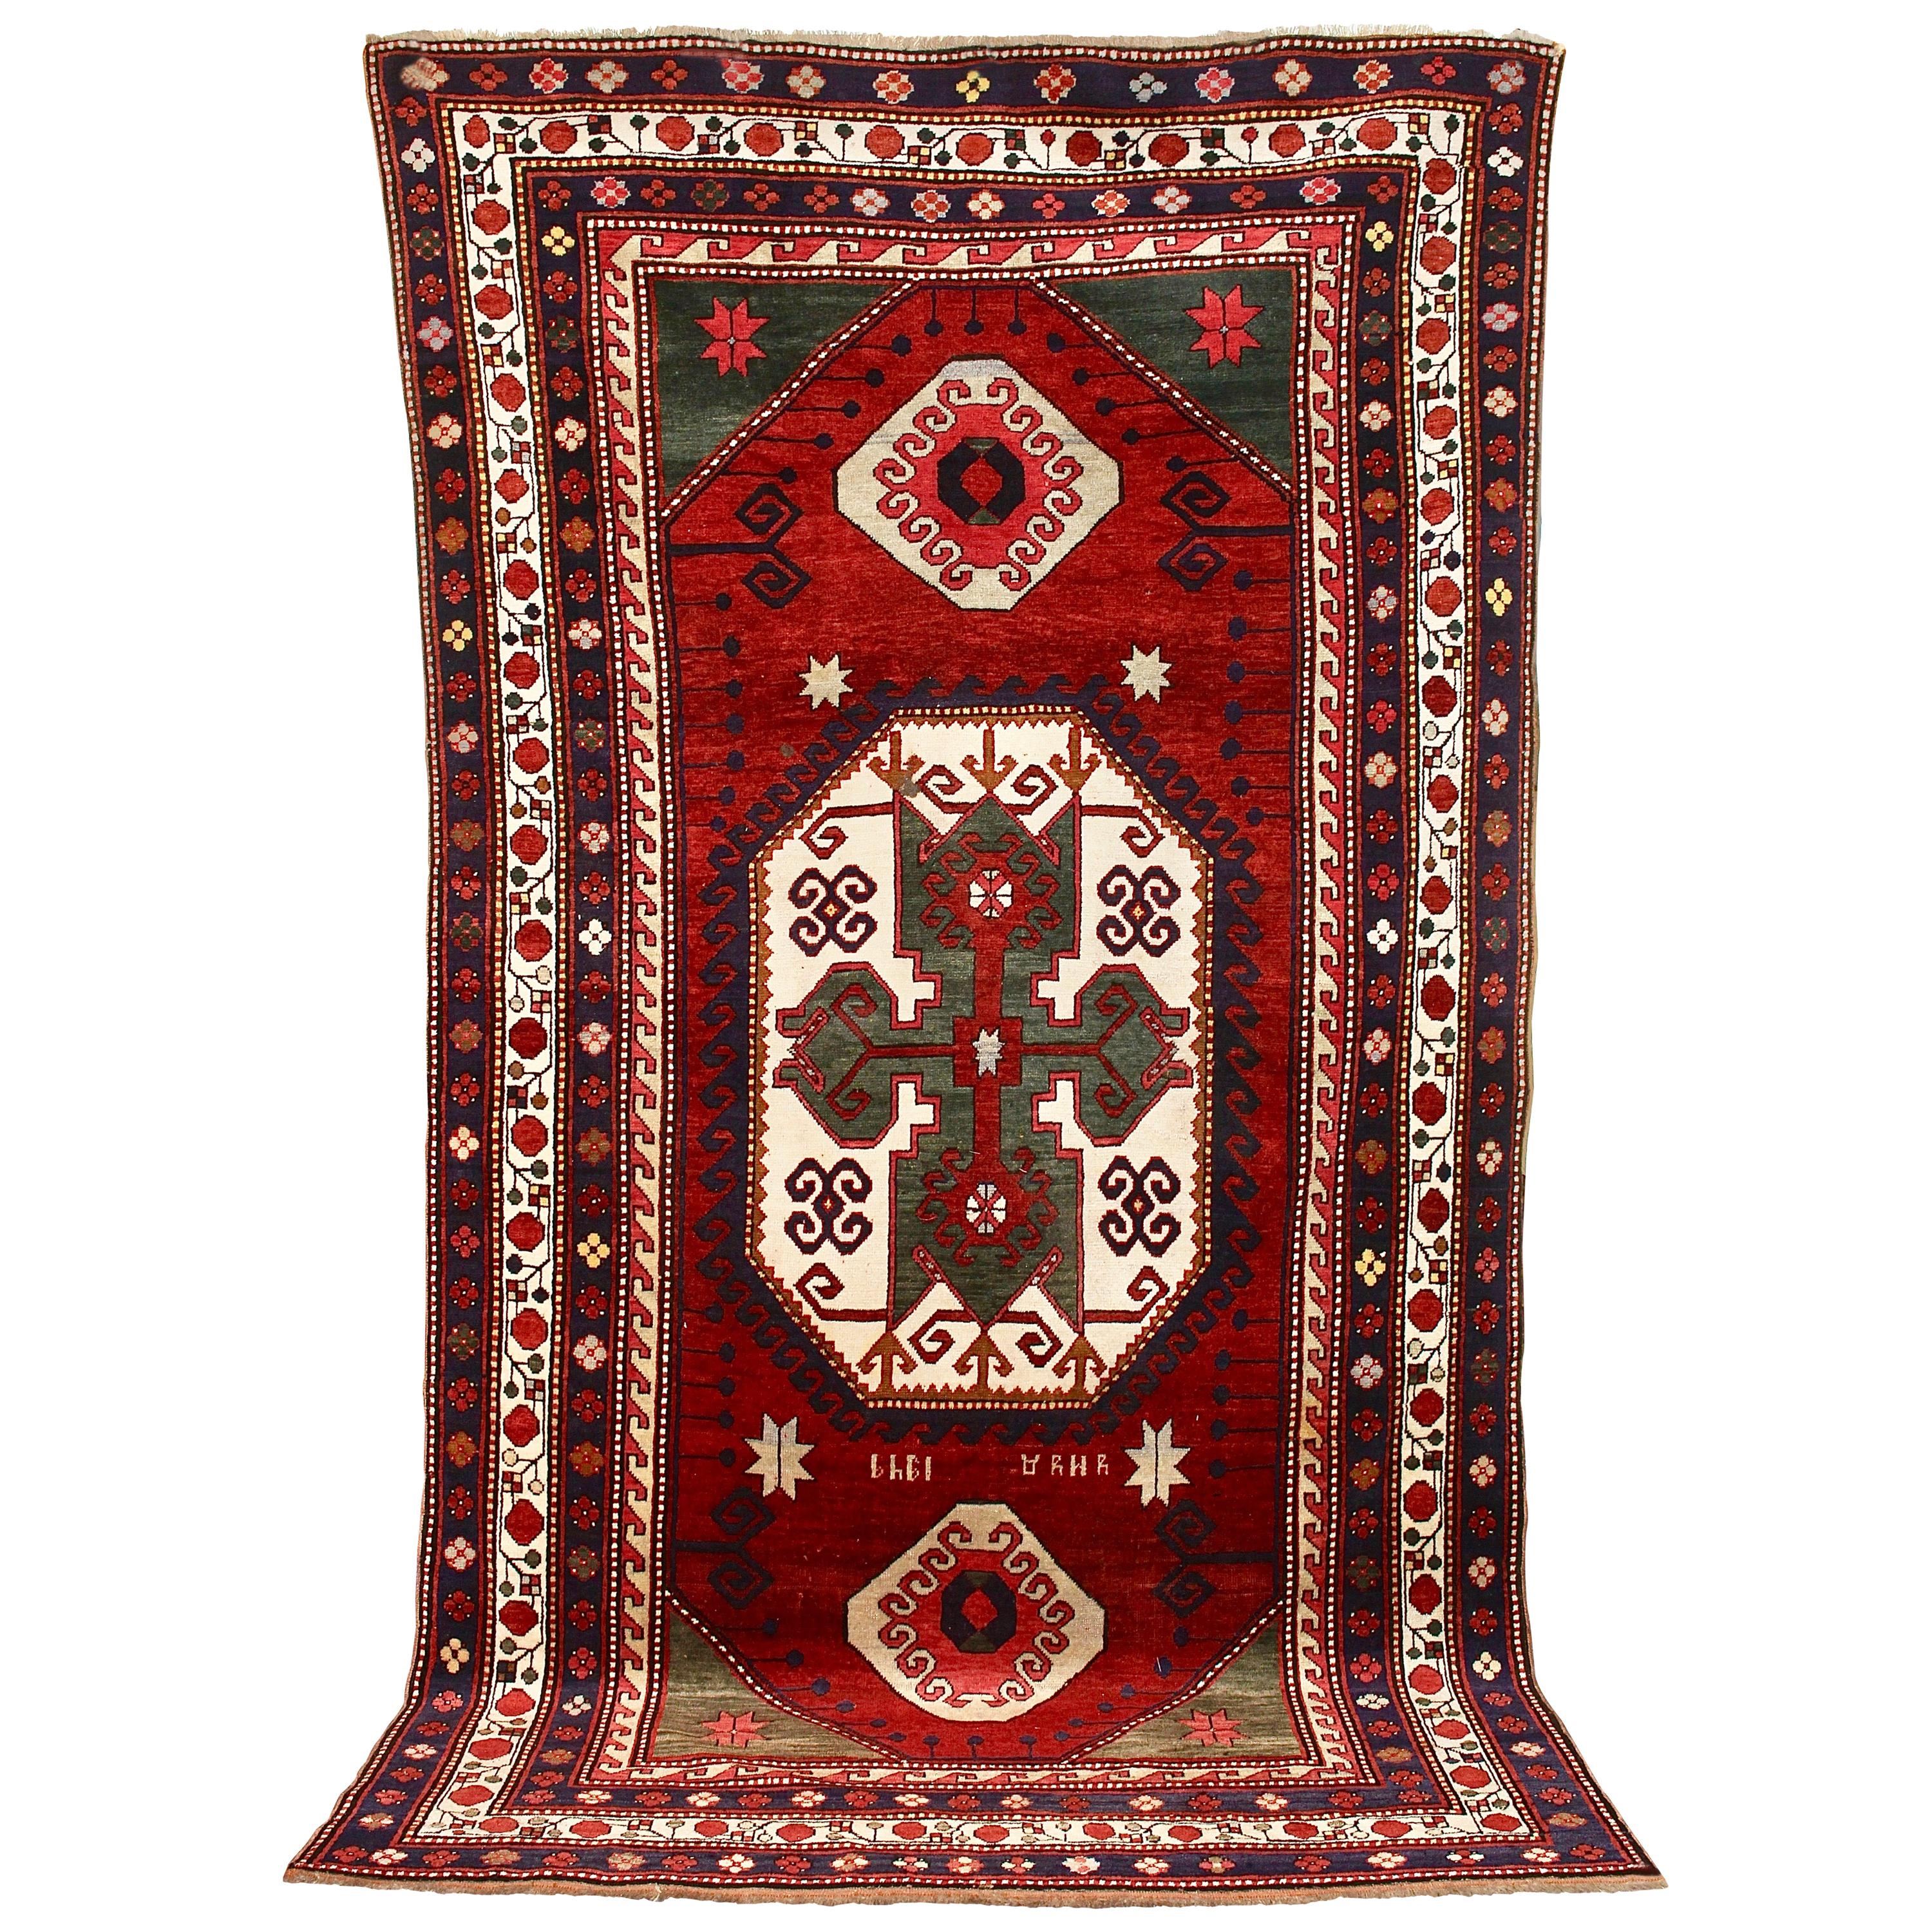 Old Fine Caucasian Carpet, Rug, Kazak, So-Called "Lori Pambak", Hand Knotted